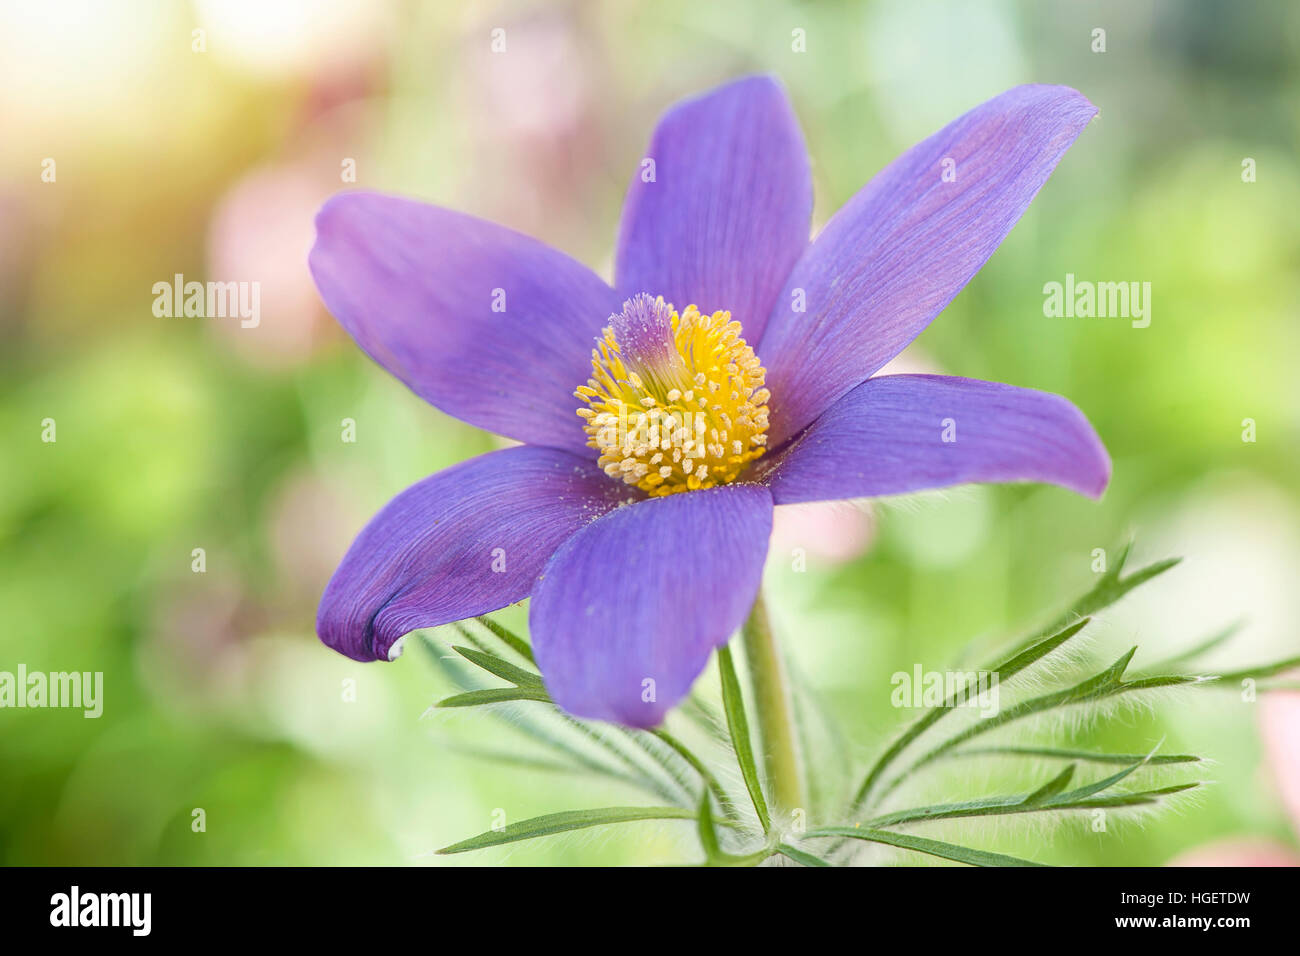 Close-up image of a single purple spring flowering Pasque flower, also known as Pulsatilla vulgaris syn: Anemone pulsatilla. Stock Photo